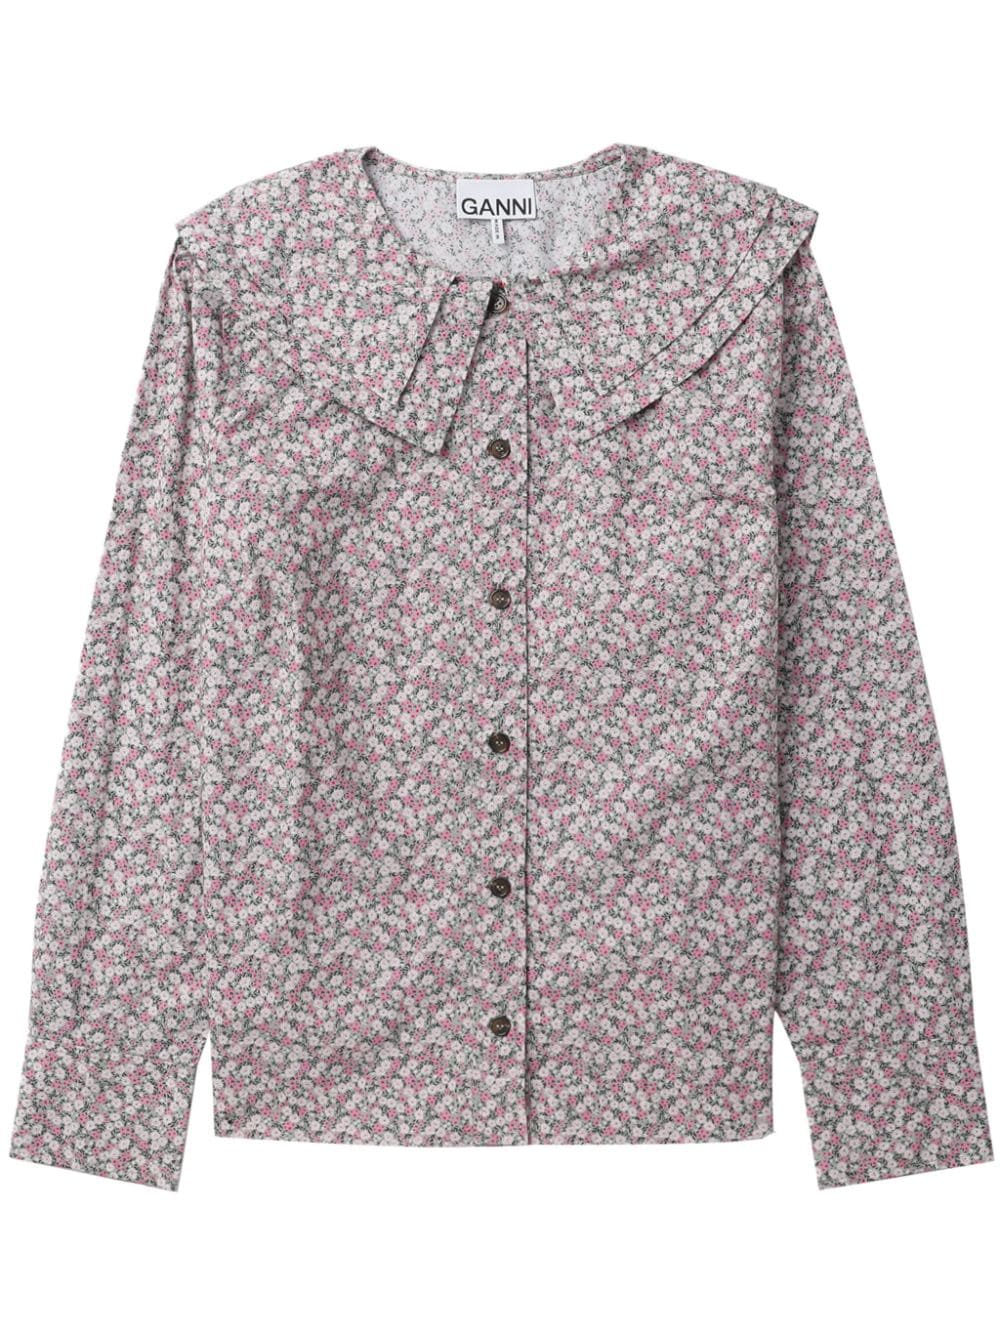 GANNI floral-print organic cotton shirt - Grey